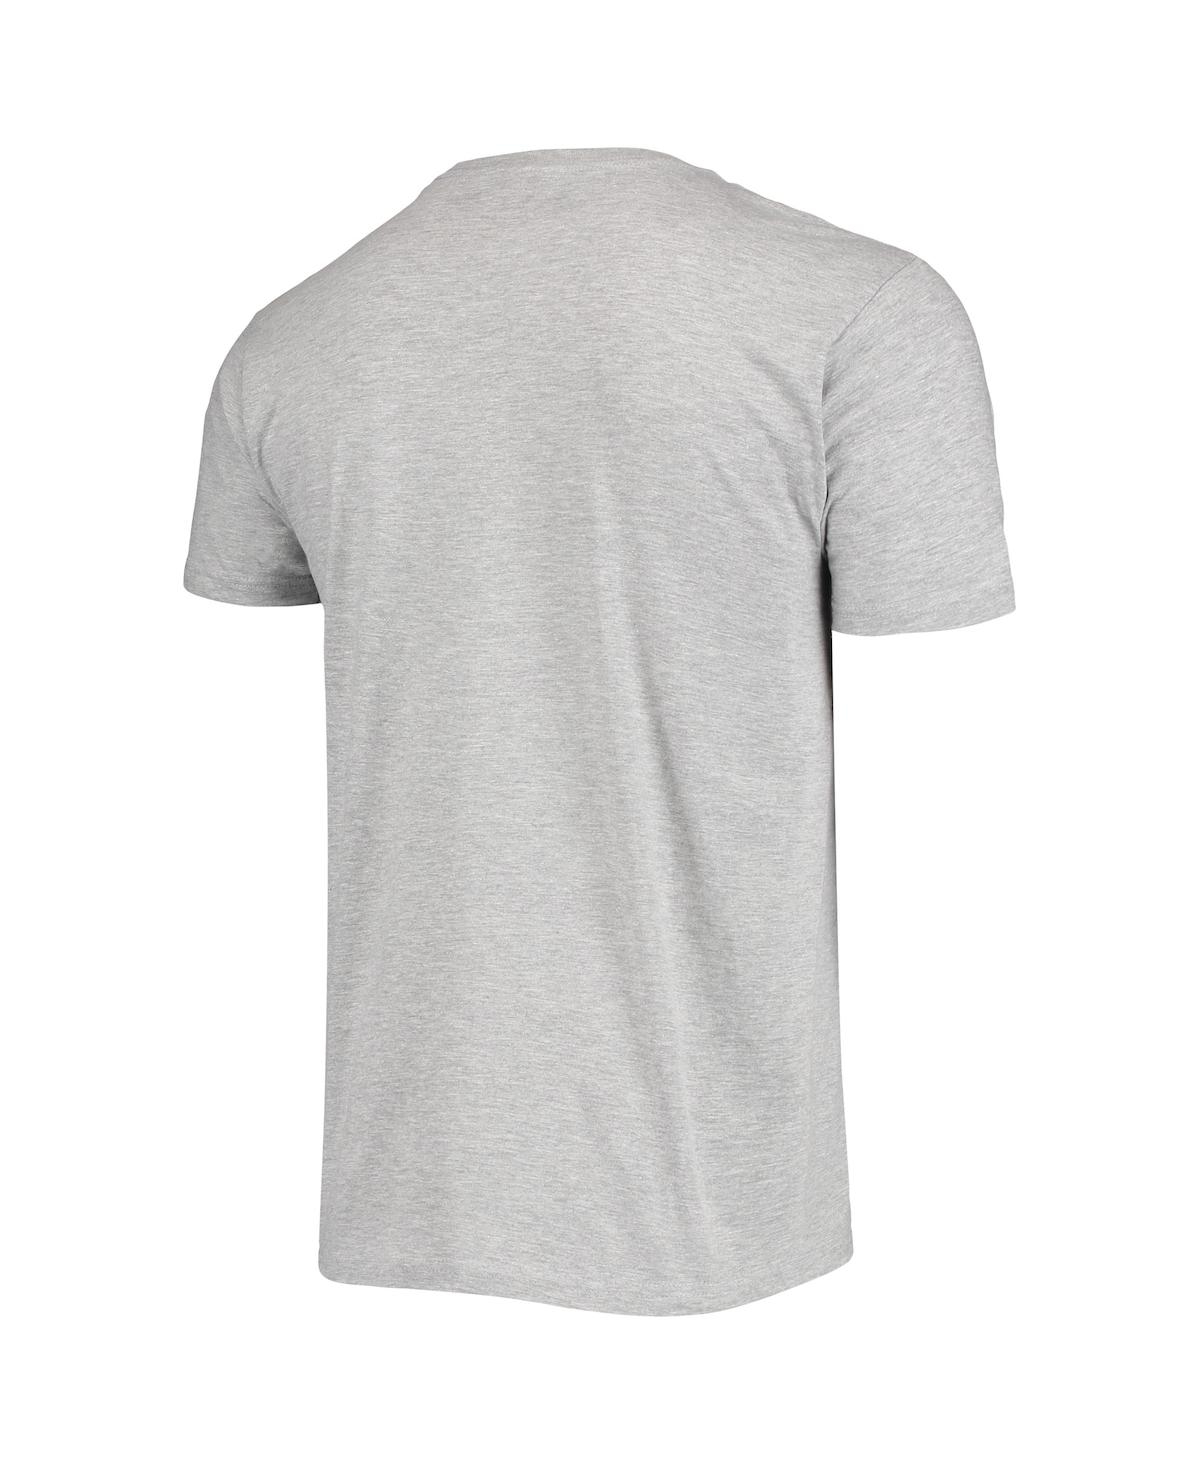 Shop Retro Brand Men's Original  Cooper Kupp Heathered Gray Eastern Washington Eagles Player T-shirt